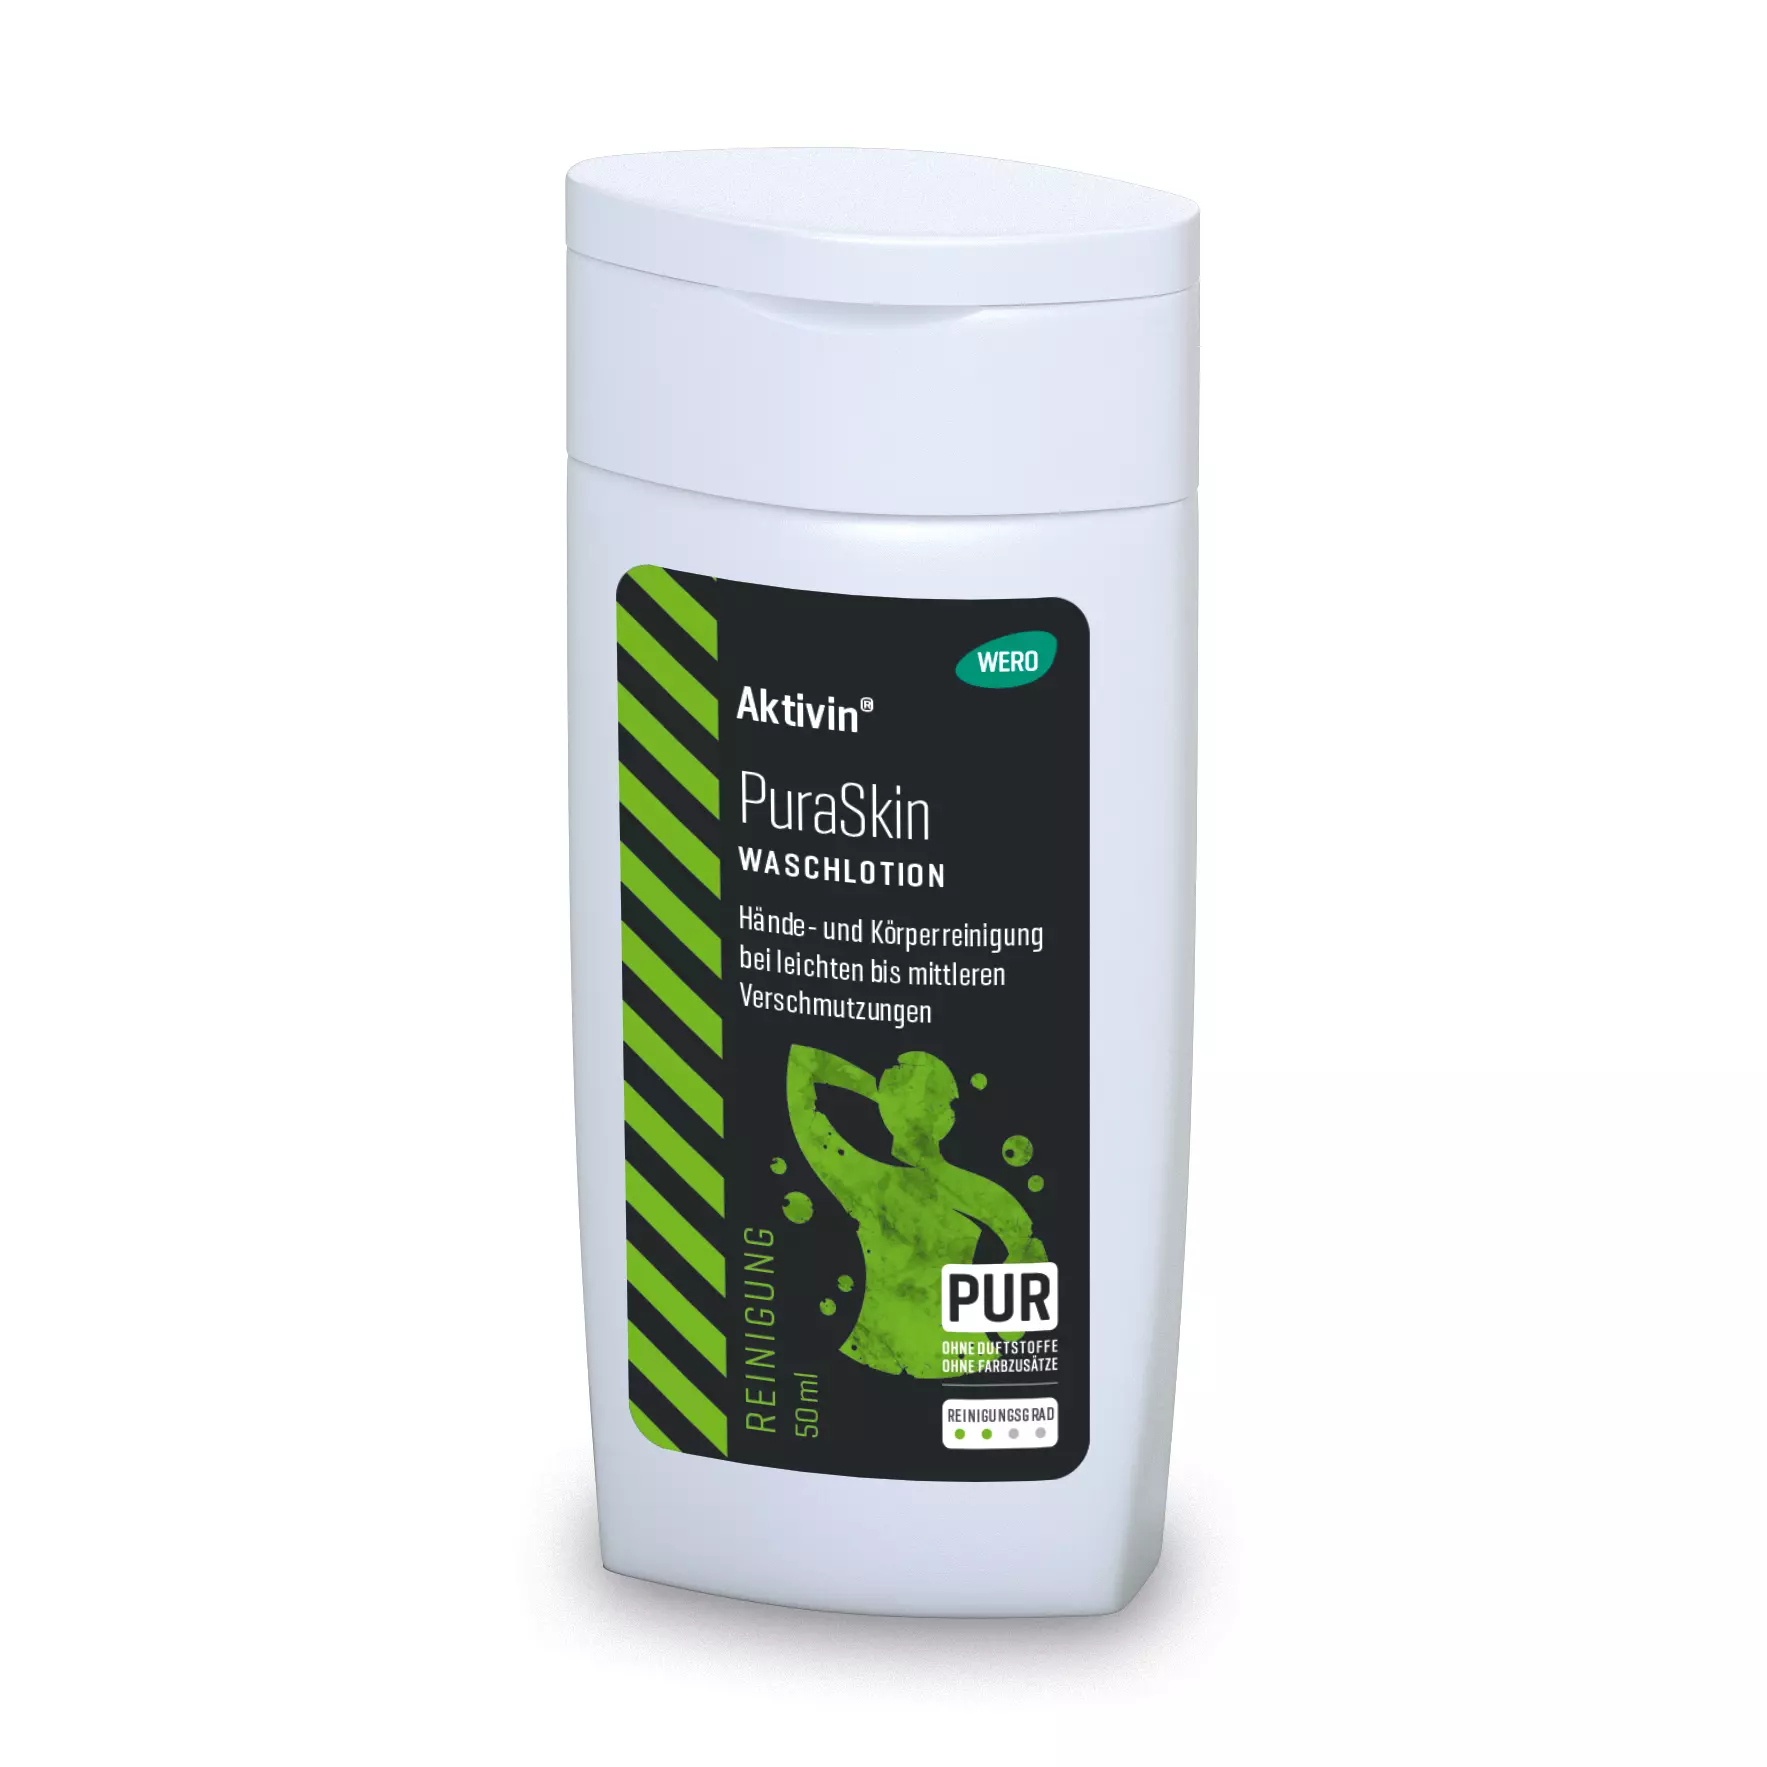 Aktivin® PuraSkin wash lotion - trial size, 50 ml